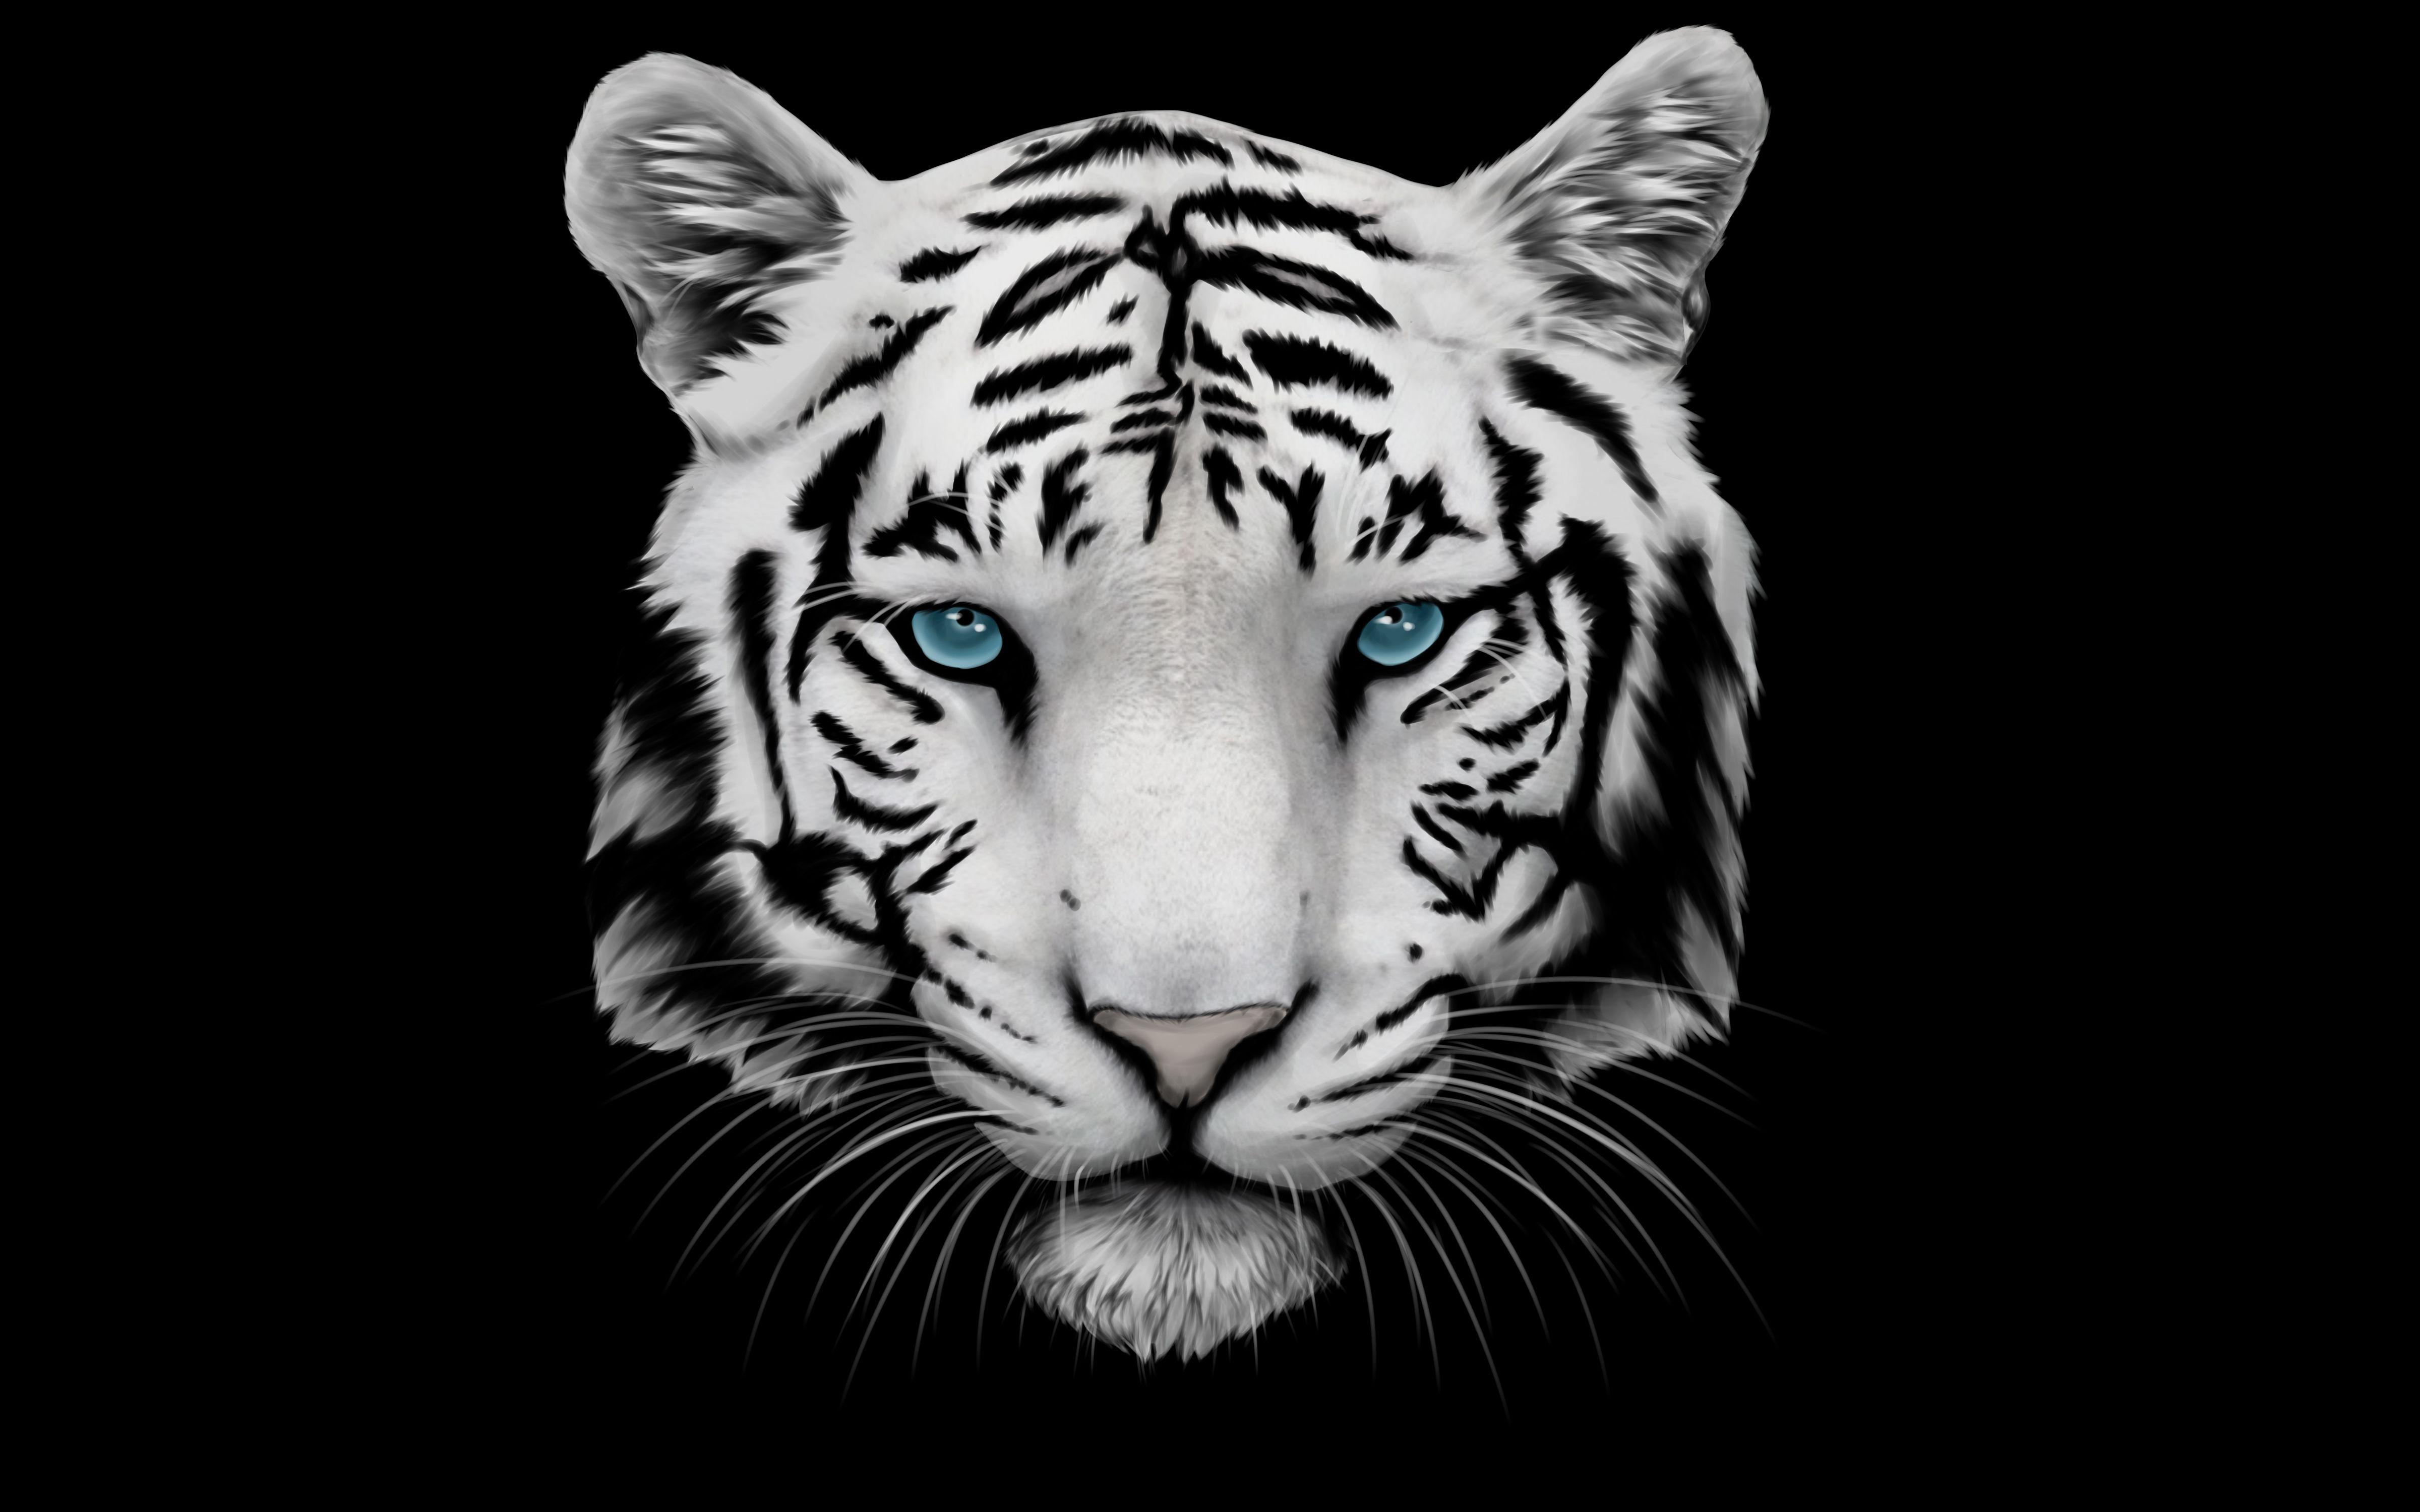 White Tiger Wallpaper High Definition. Tiger wallpaper